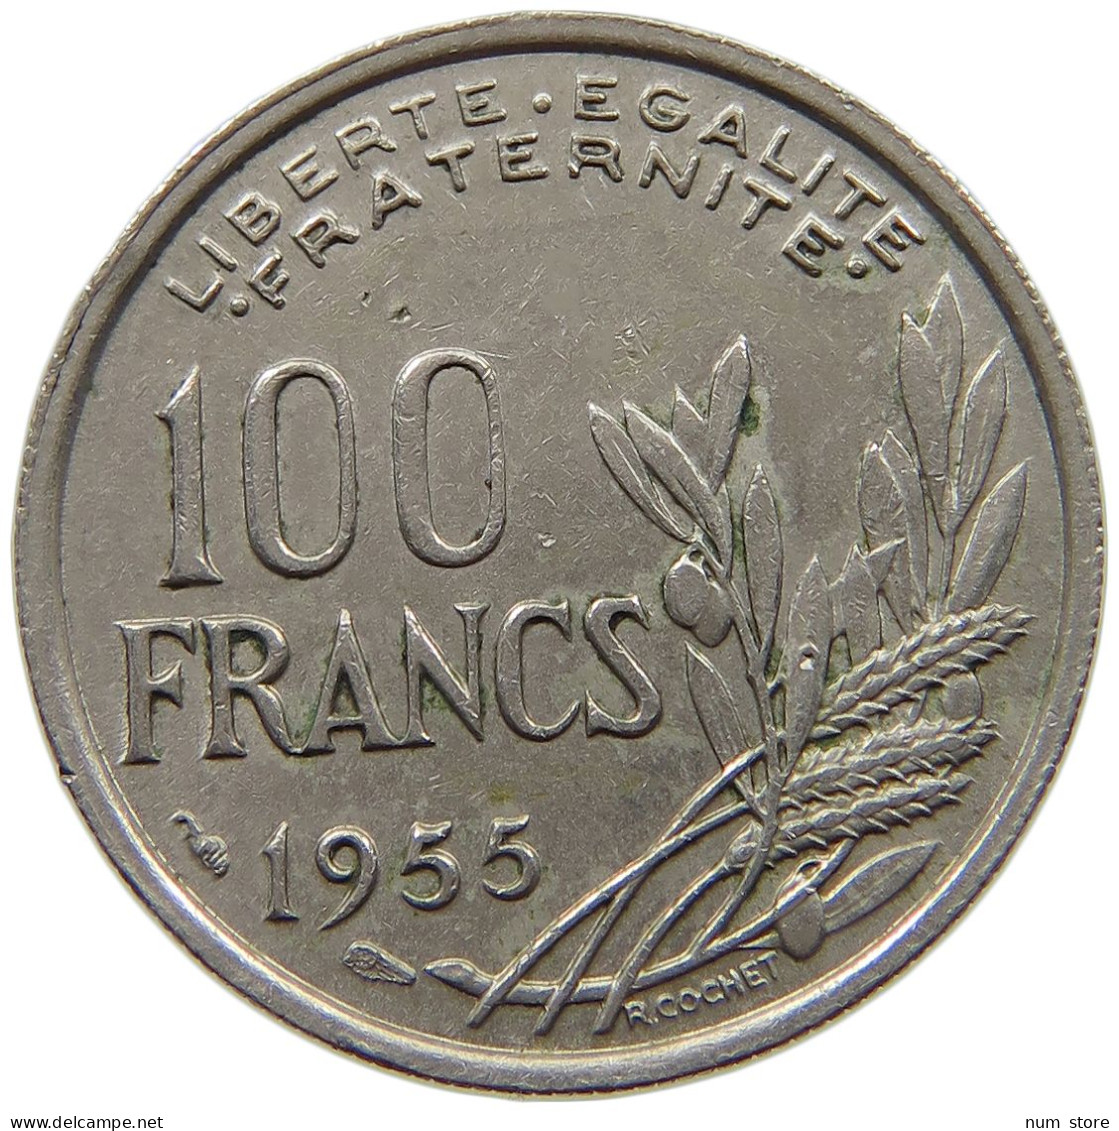 FRANCE 100 FRANCS 1955 #a089 0639 - 100 Francs